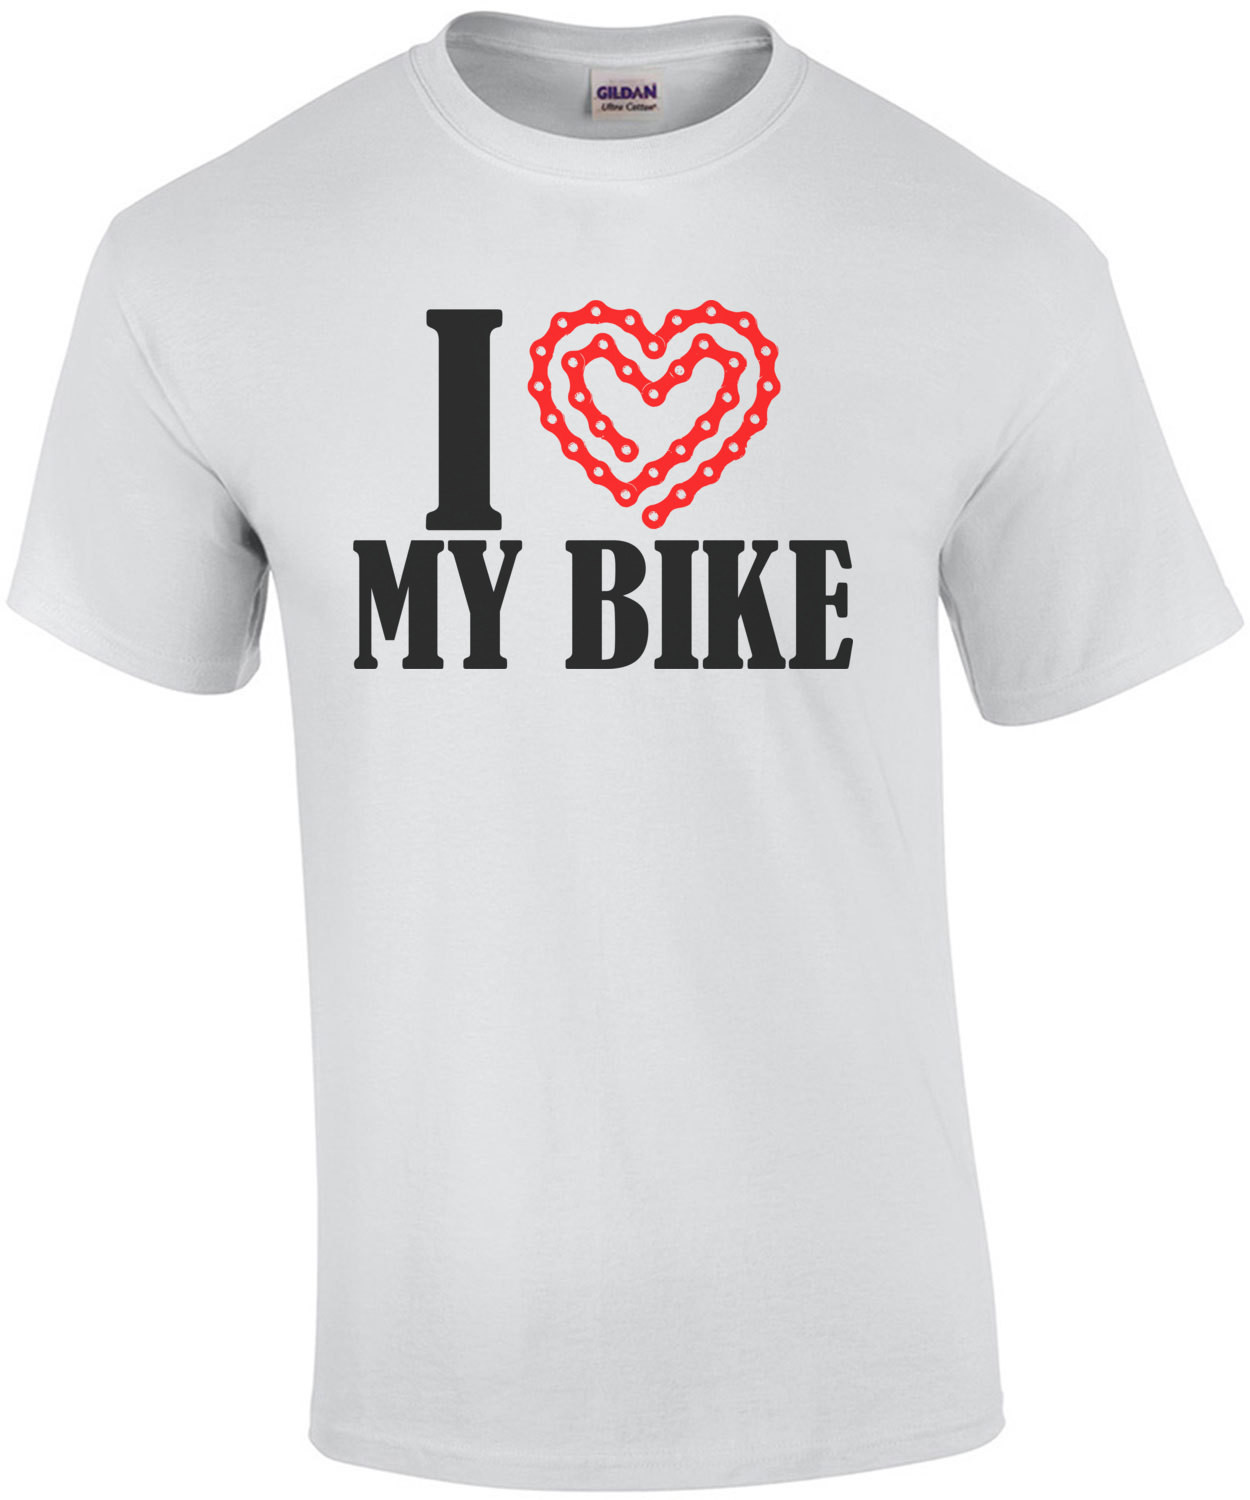 I Love My Bike T-Shirt